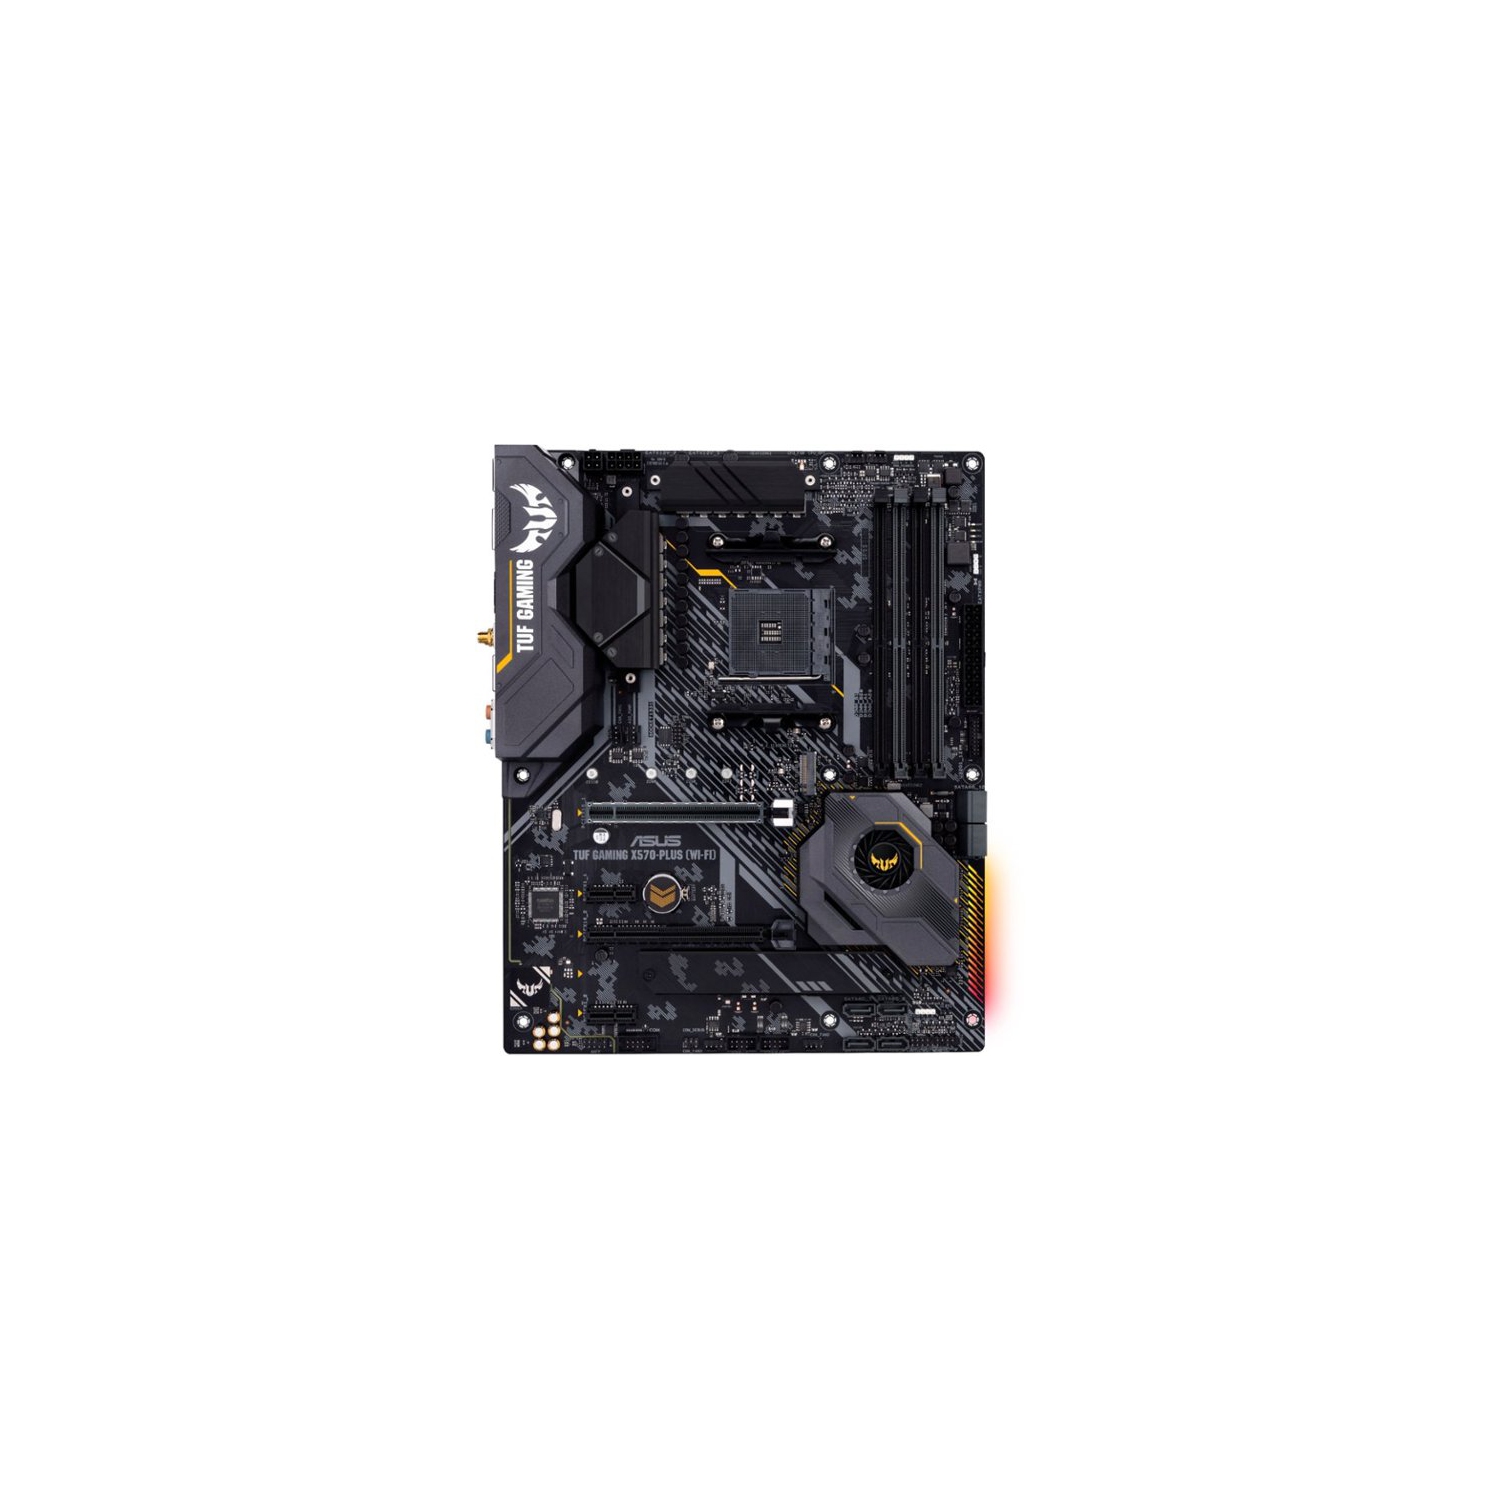 Refurbished (Good) ASUS - TUF GAMING X570-PLUS (WI-FI) (Socket AM4) USB-C Gen2 AMD Motherboard with LED Lighting